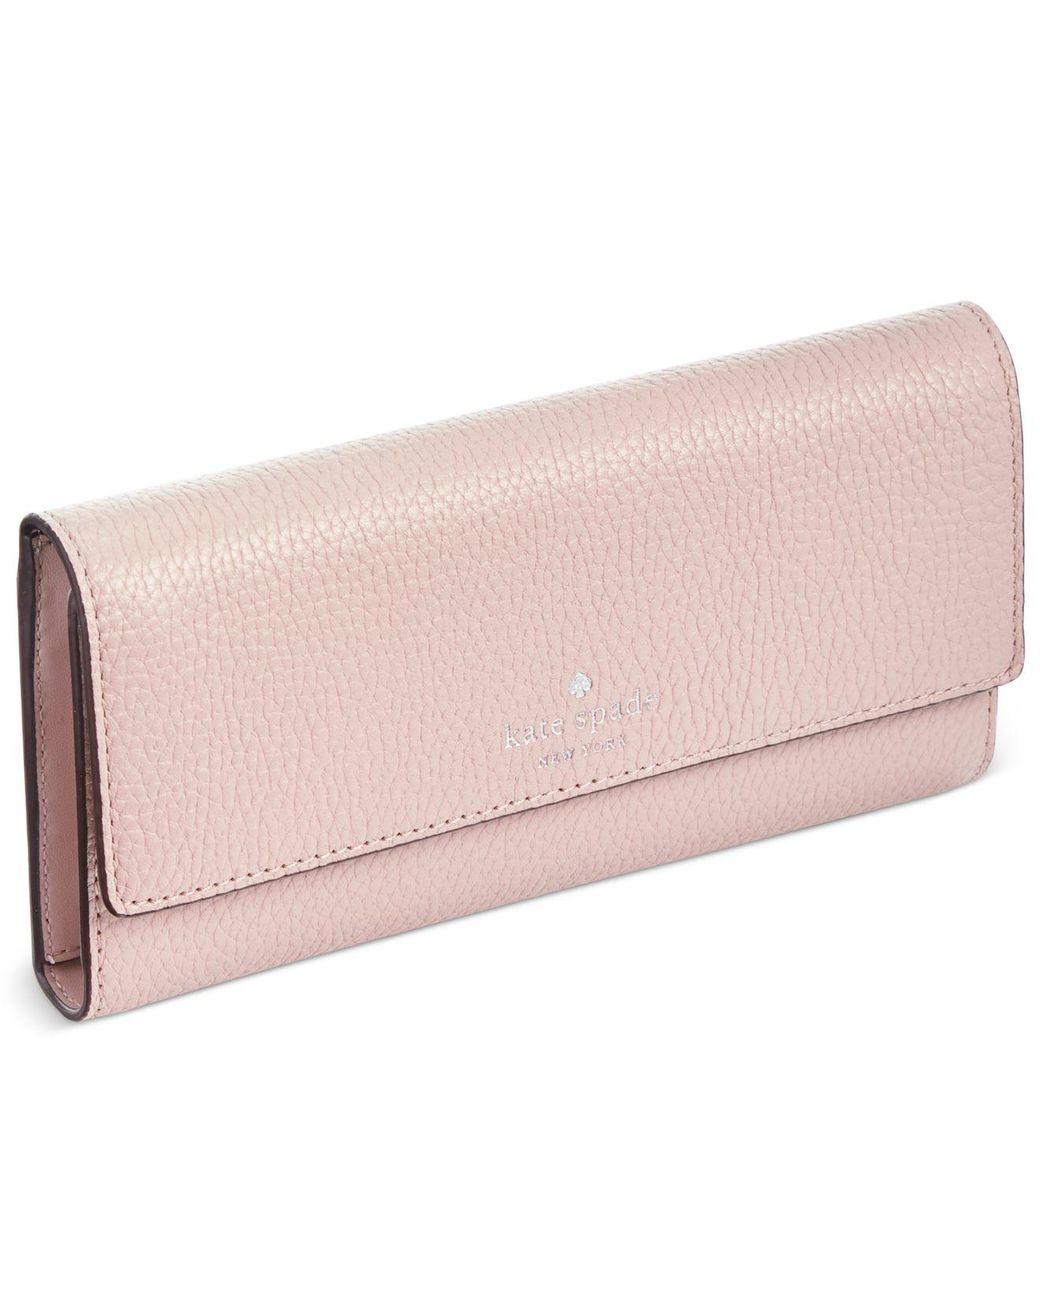 Kate Spade Southport Avenue Sandra Flap Wallet in Pink | Lyst